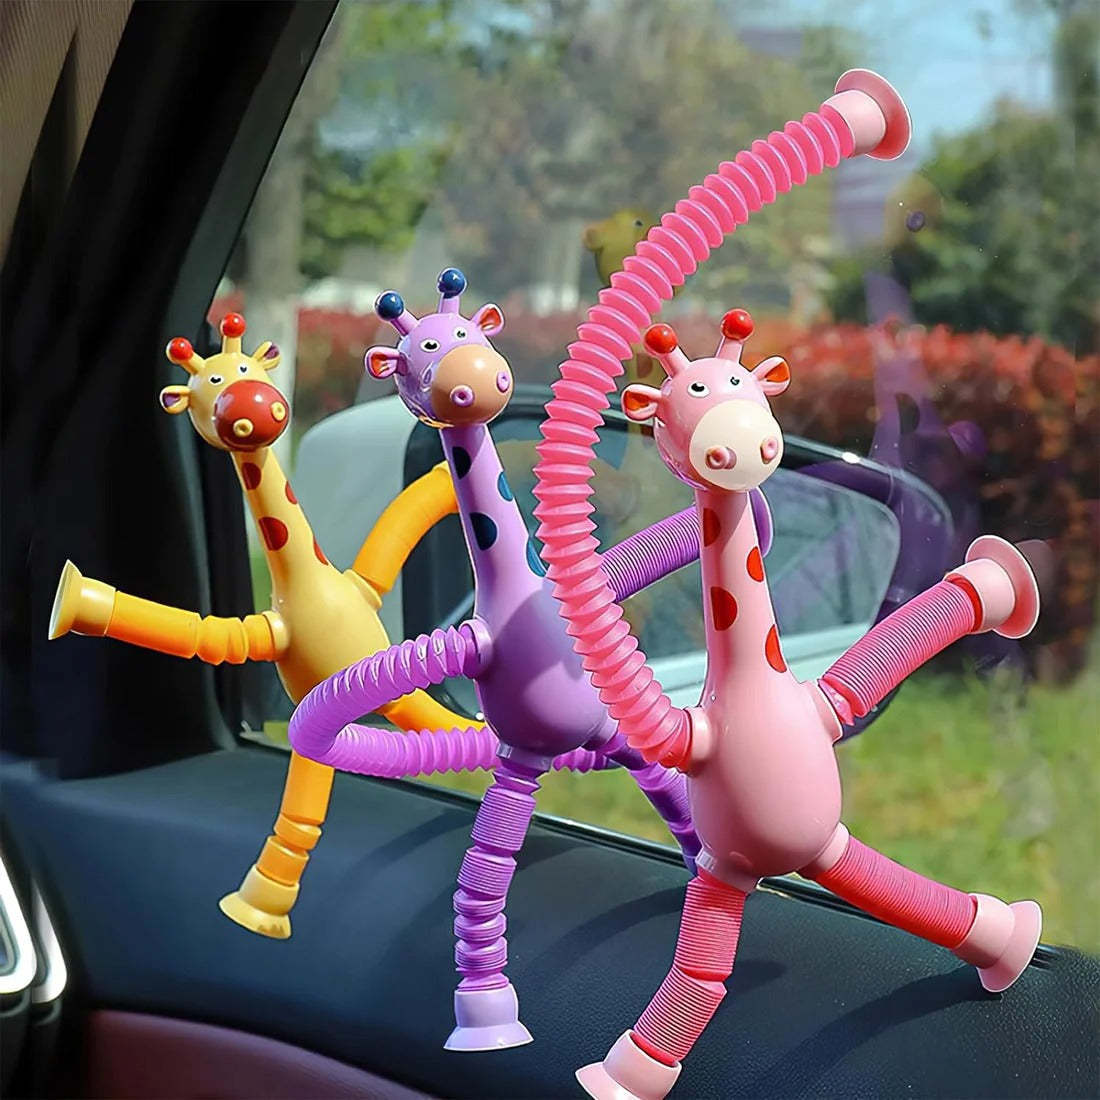 Giraffe Pop Stretch Tubes Fidget Fun Toy ( Each Sold Separately)